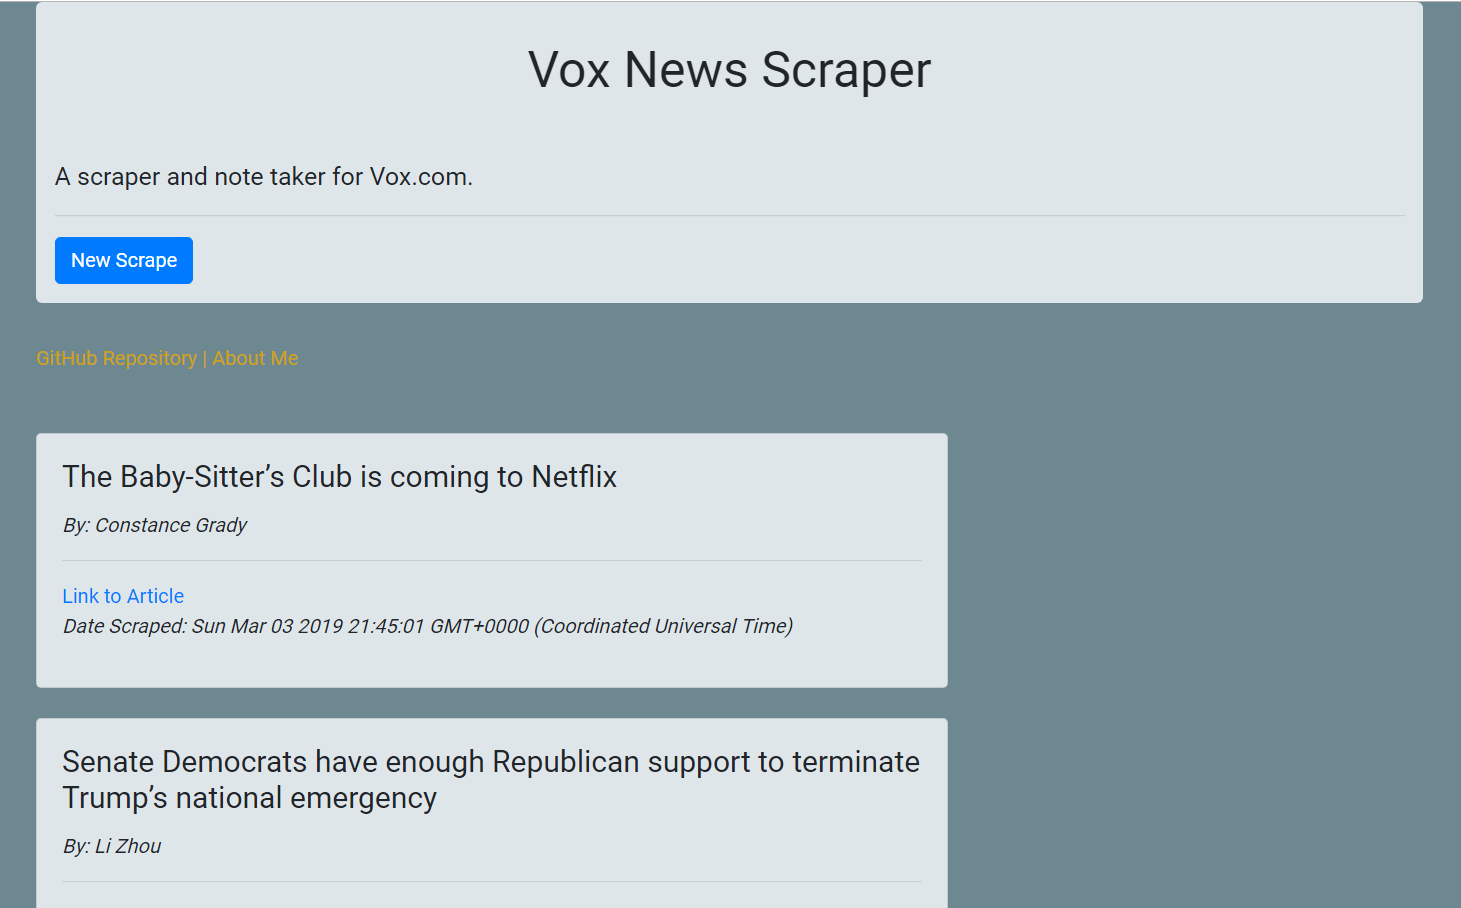 Vox.com News Scraper